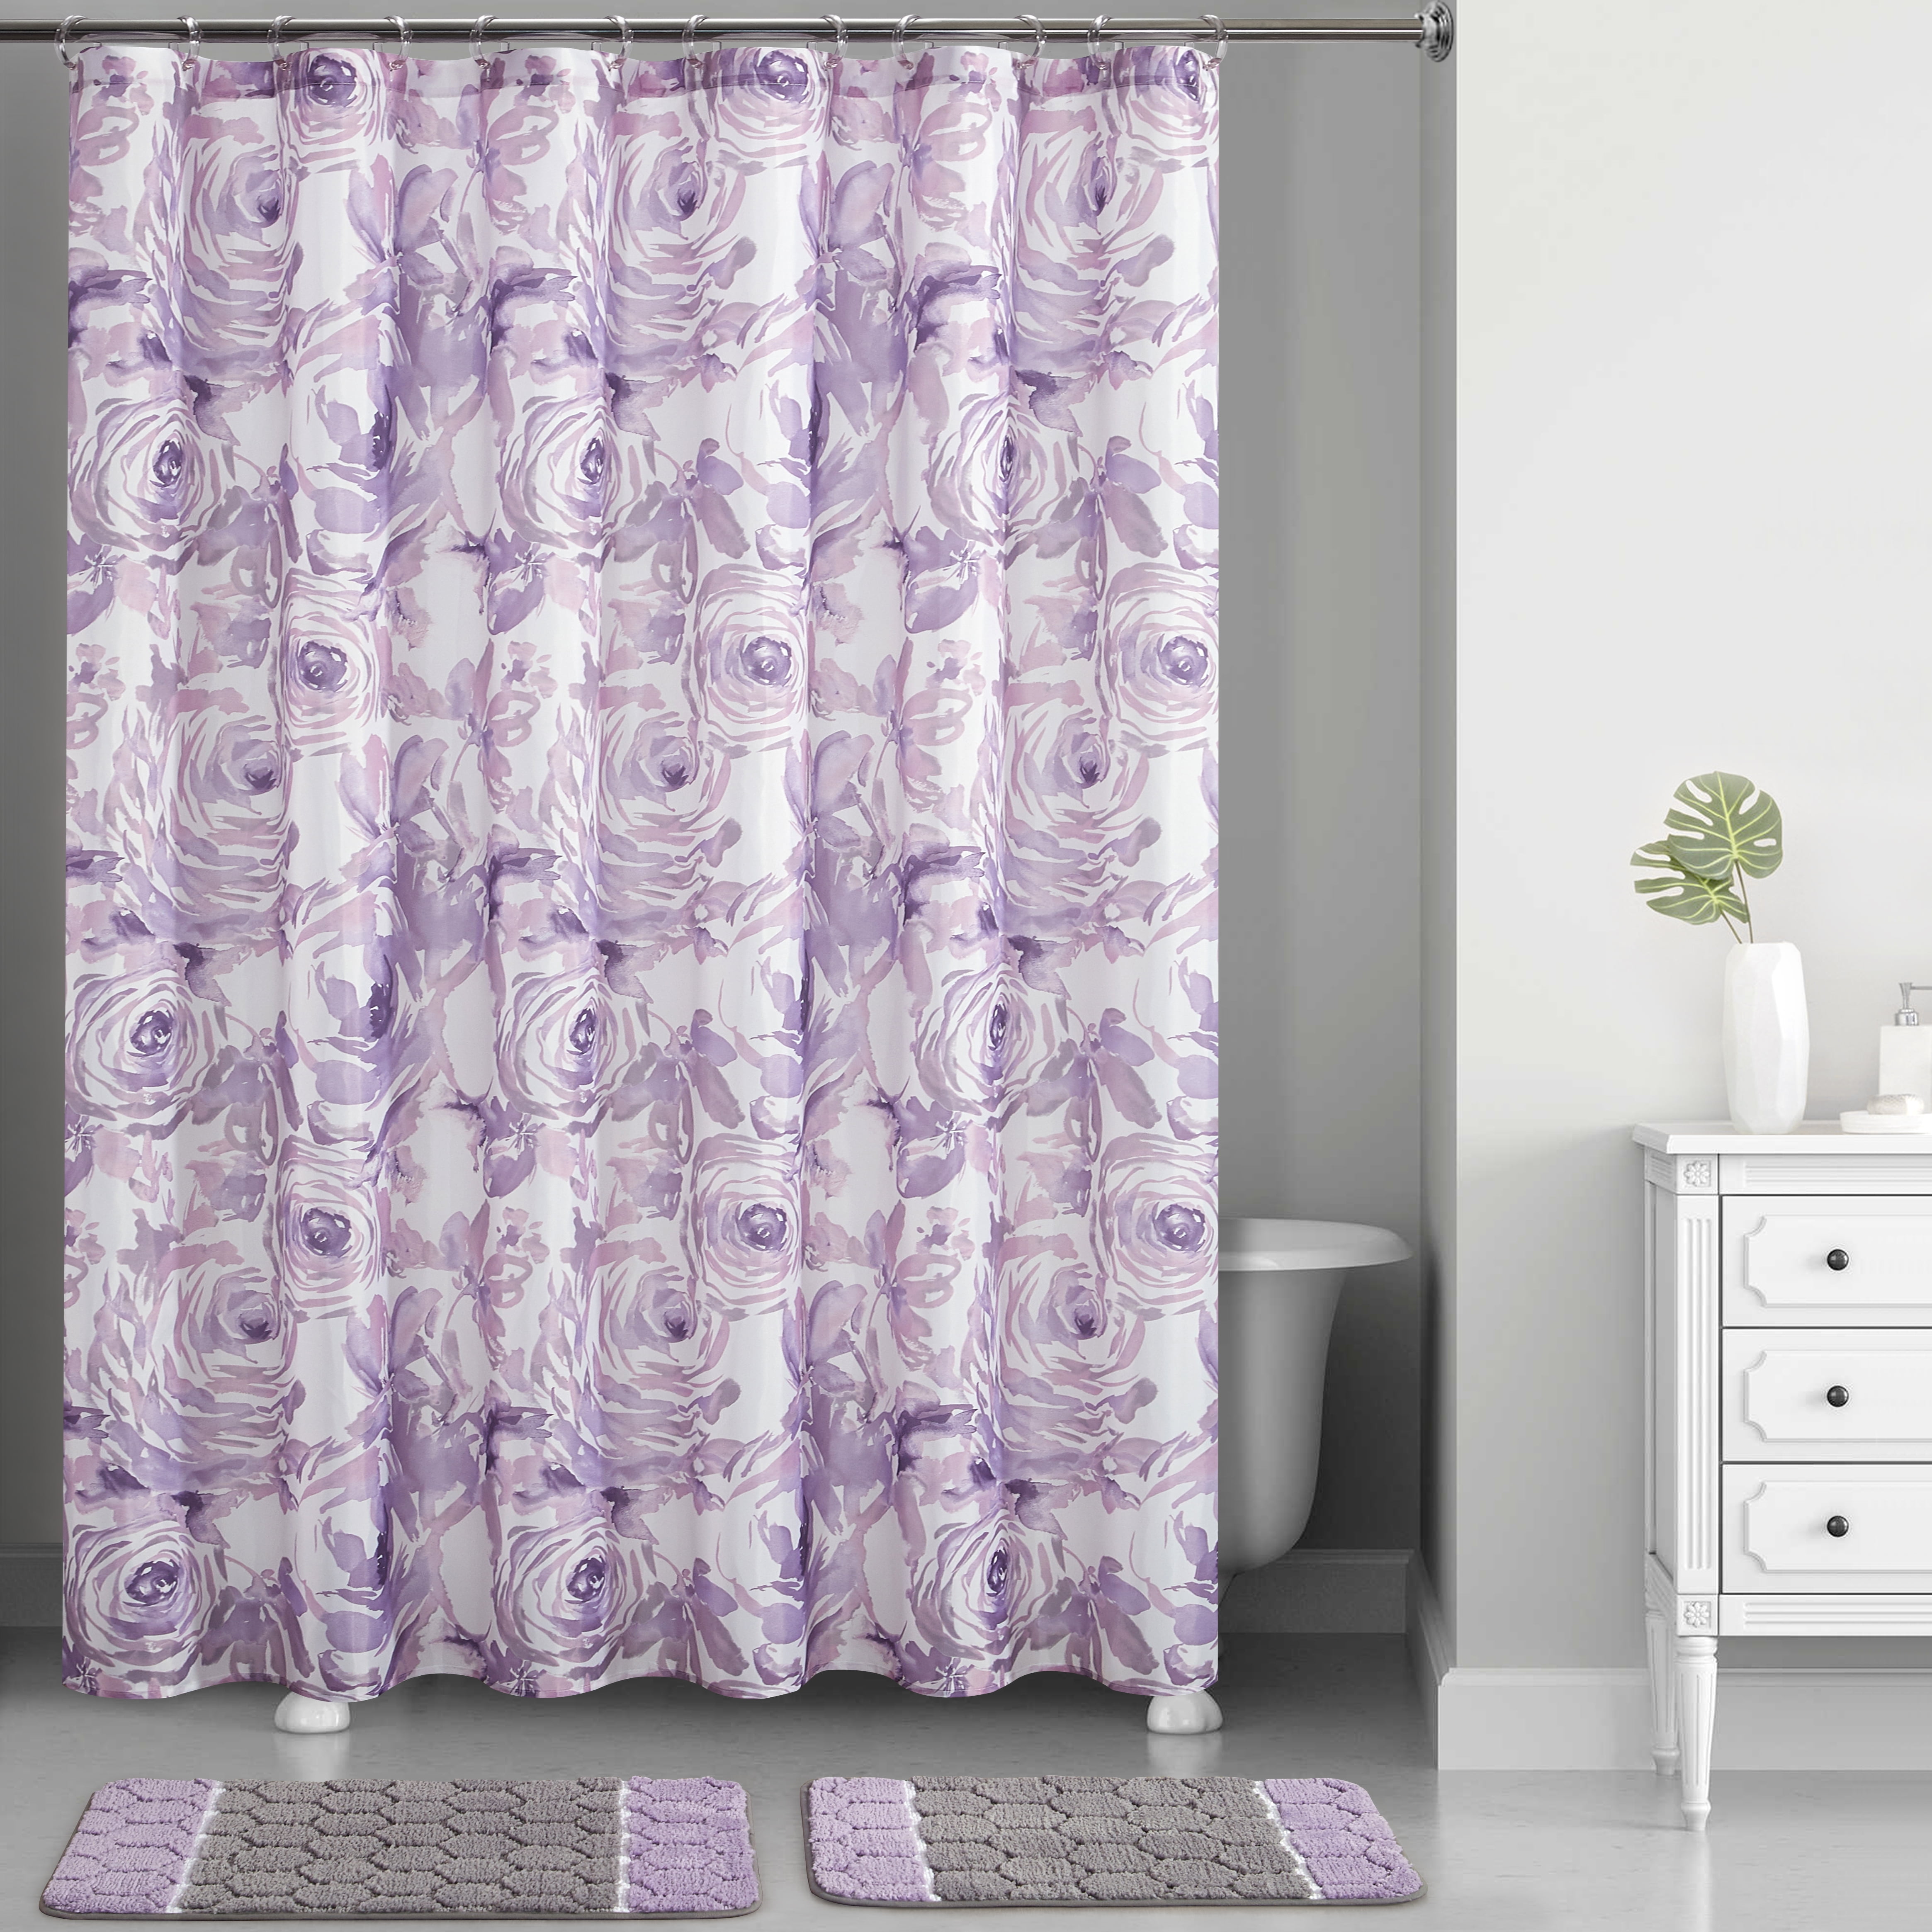 Shower Curtain Art Bathroom Decor Star Wars 3D Full Printed Design Curtains 